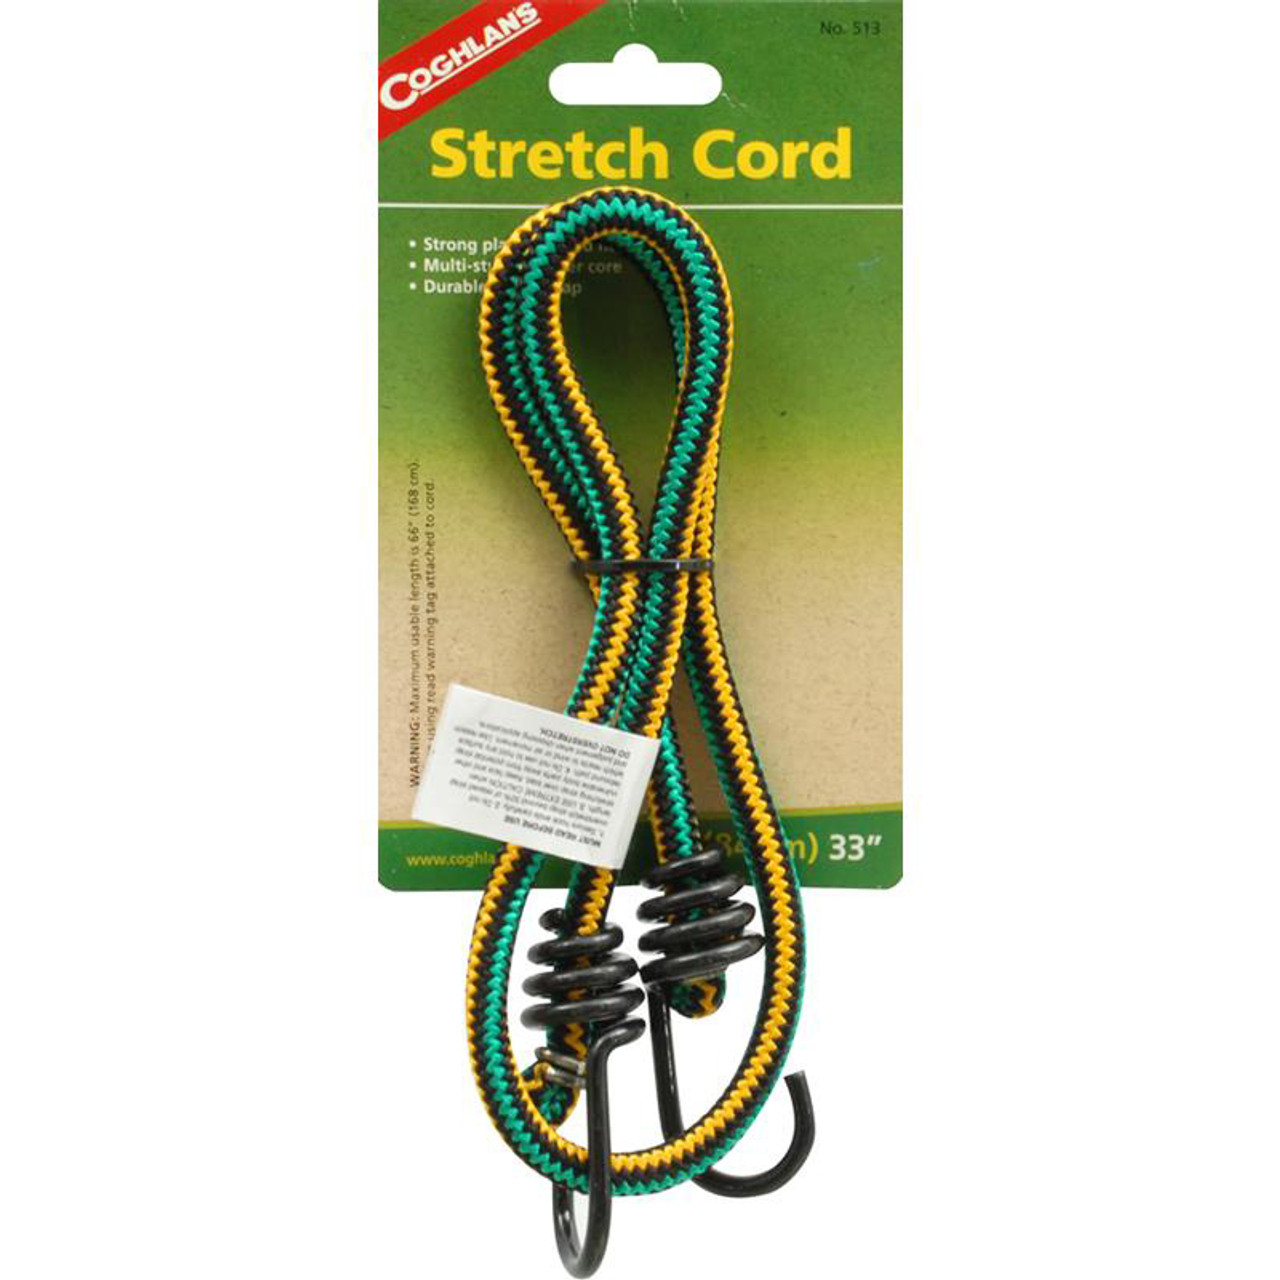 Coghlan's 50 Stretch Cord